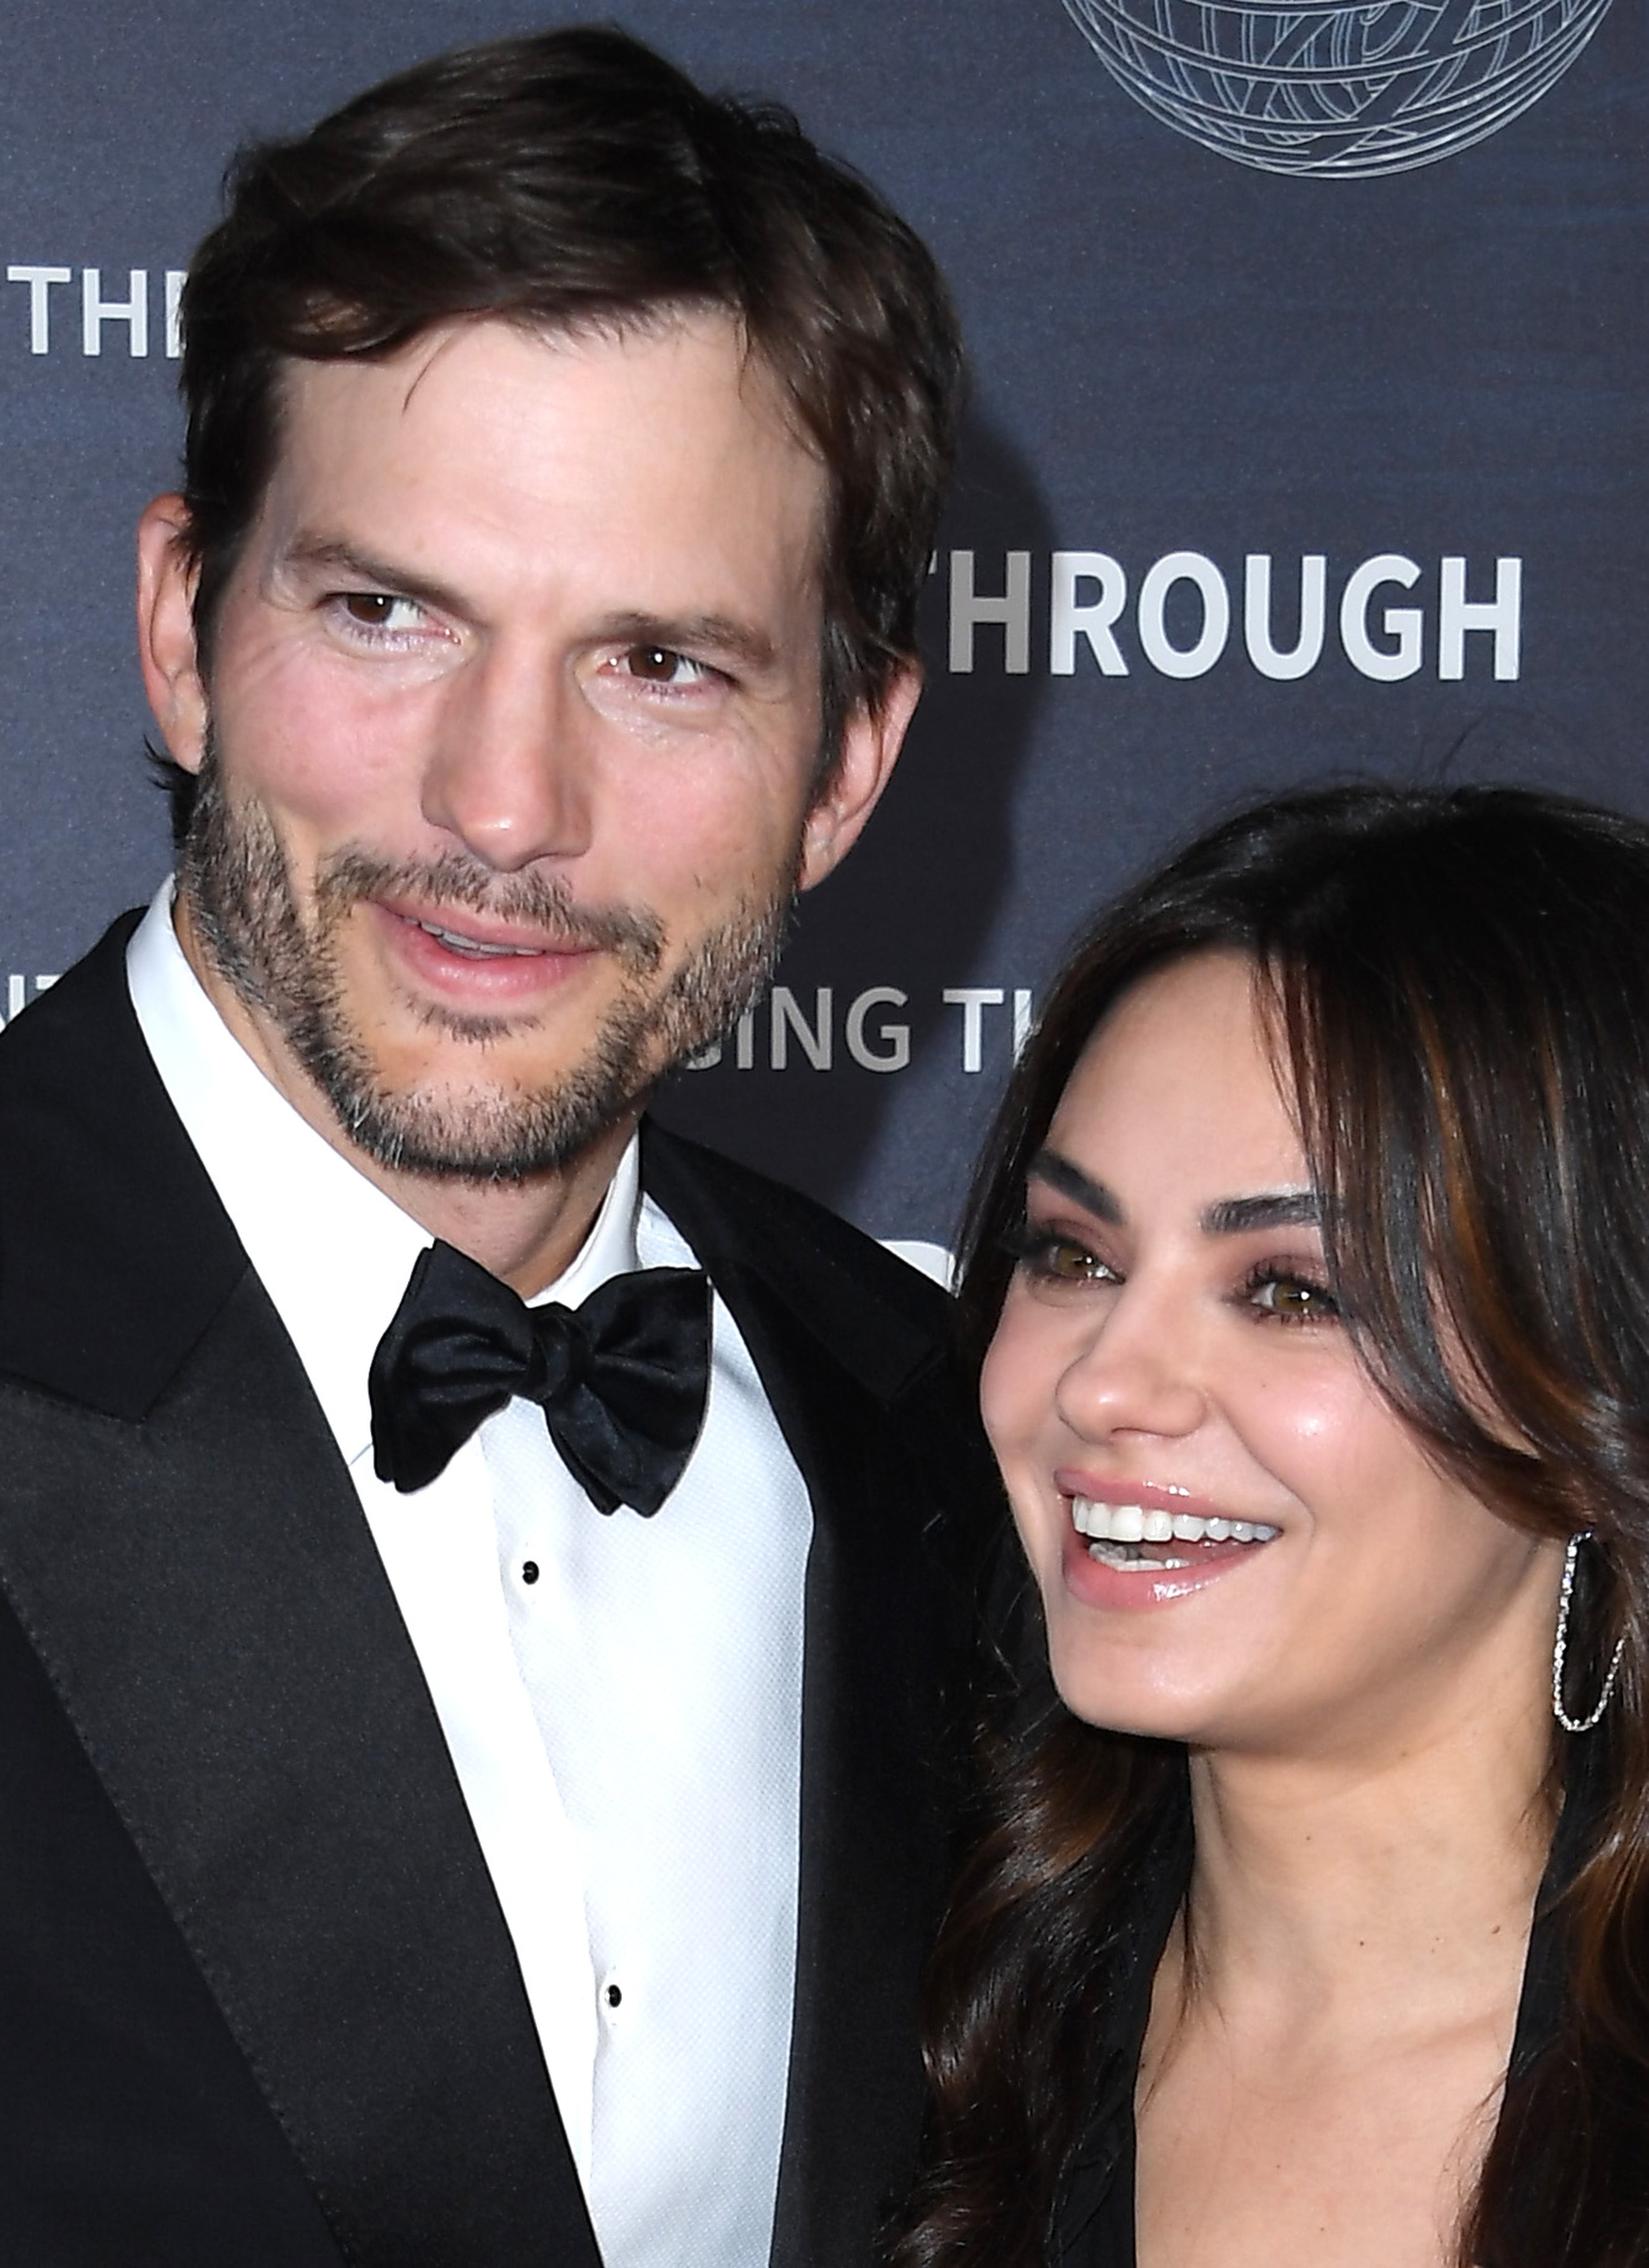 Ashton Kutcher Calls Himself the “Luckiest Man Alive” in Rare Tribute to Wife Mila Kunis